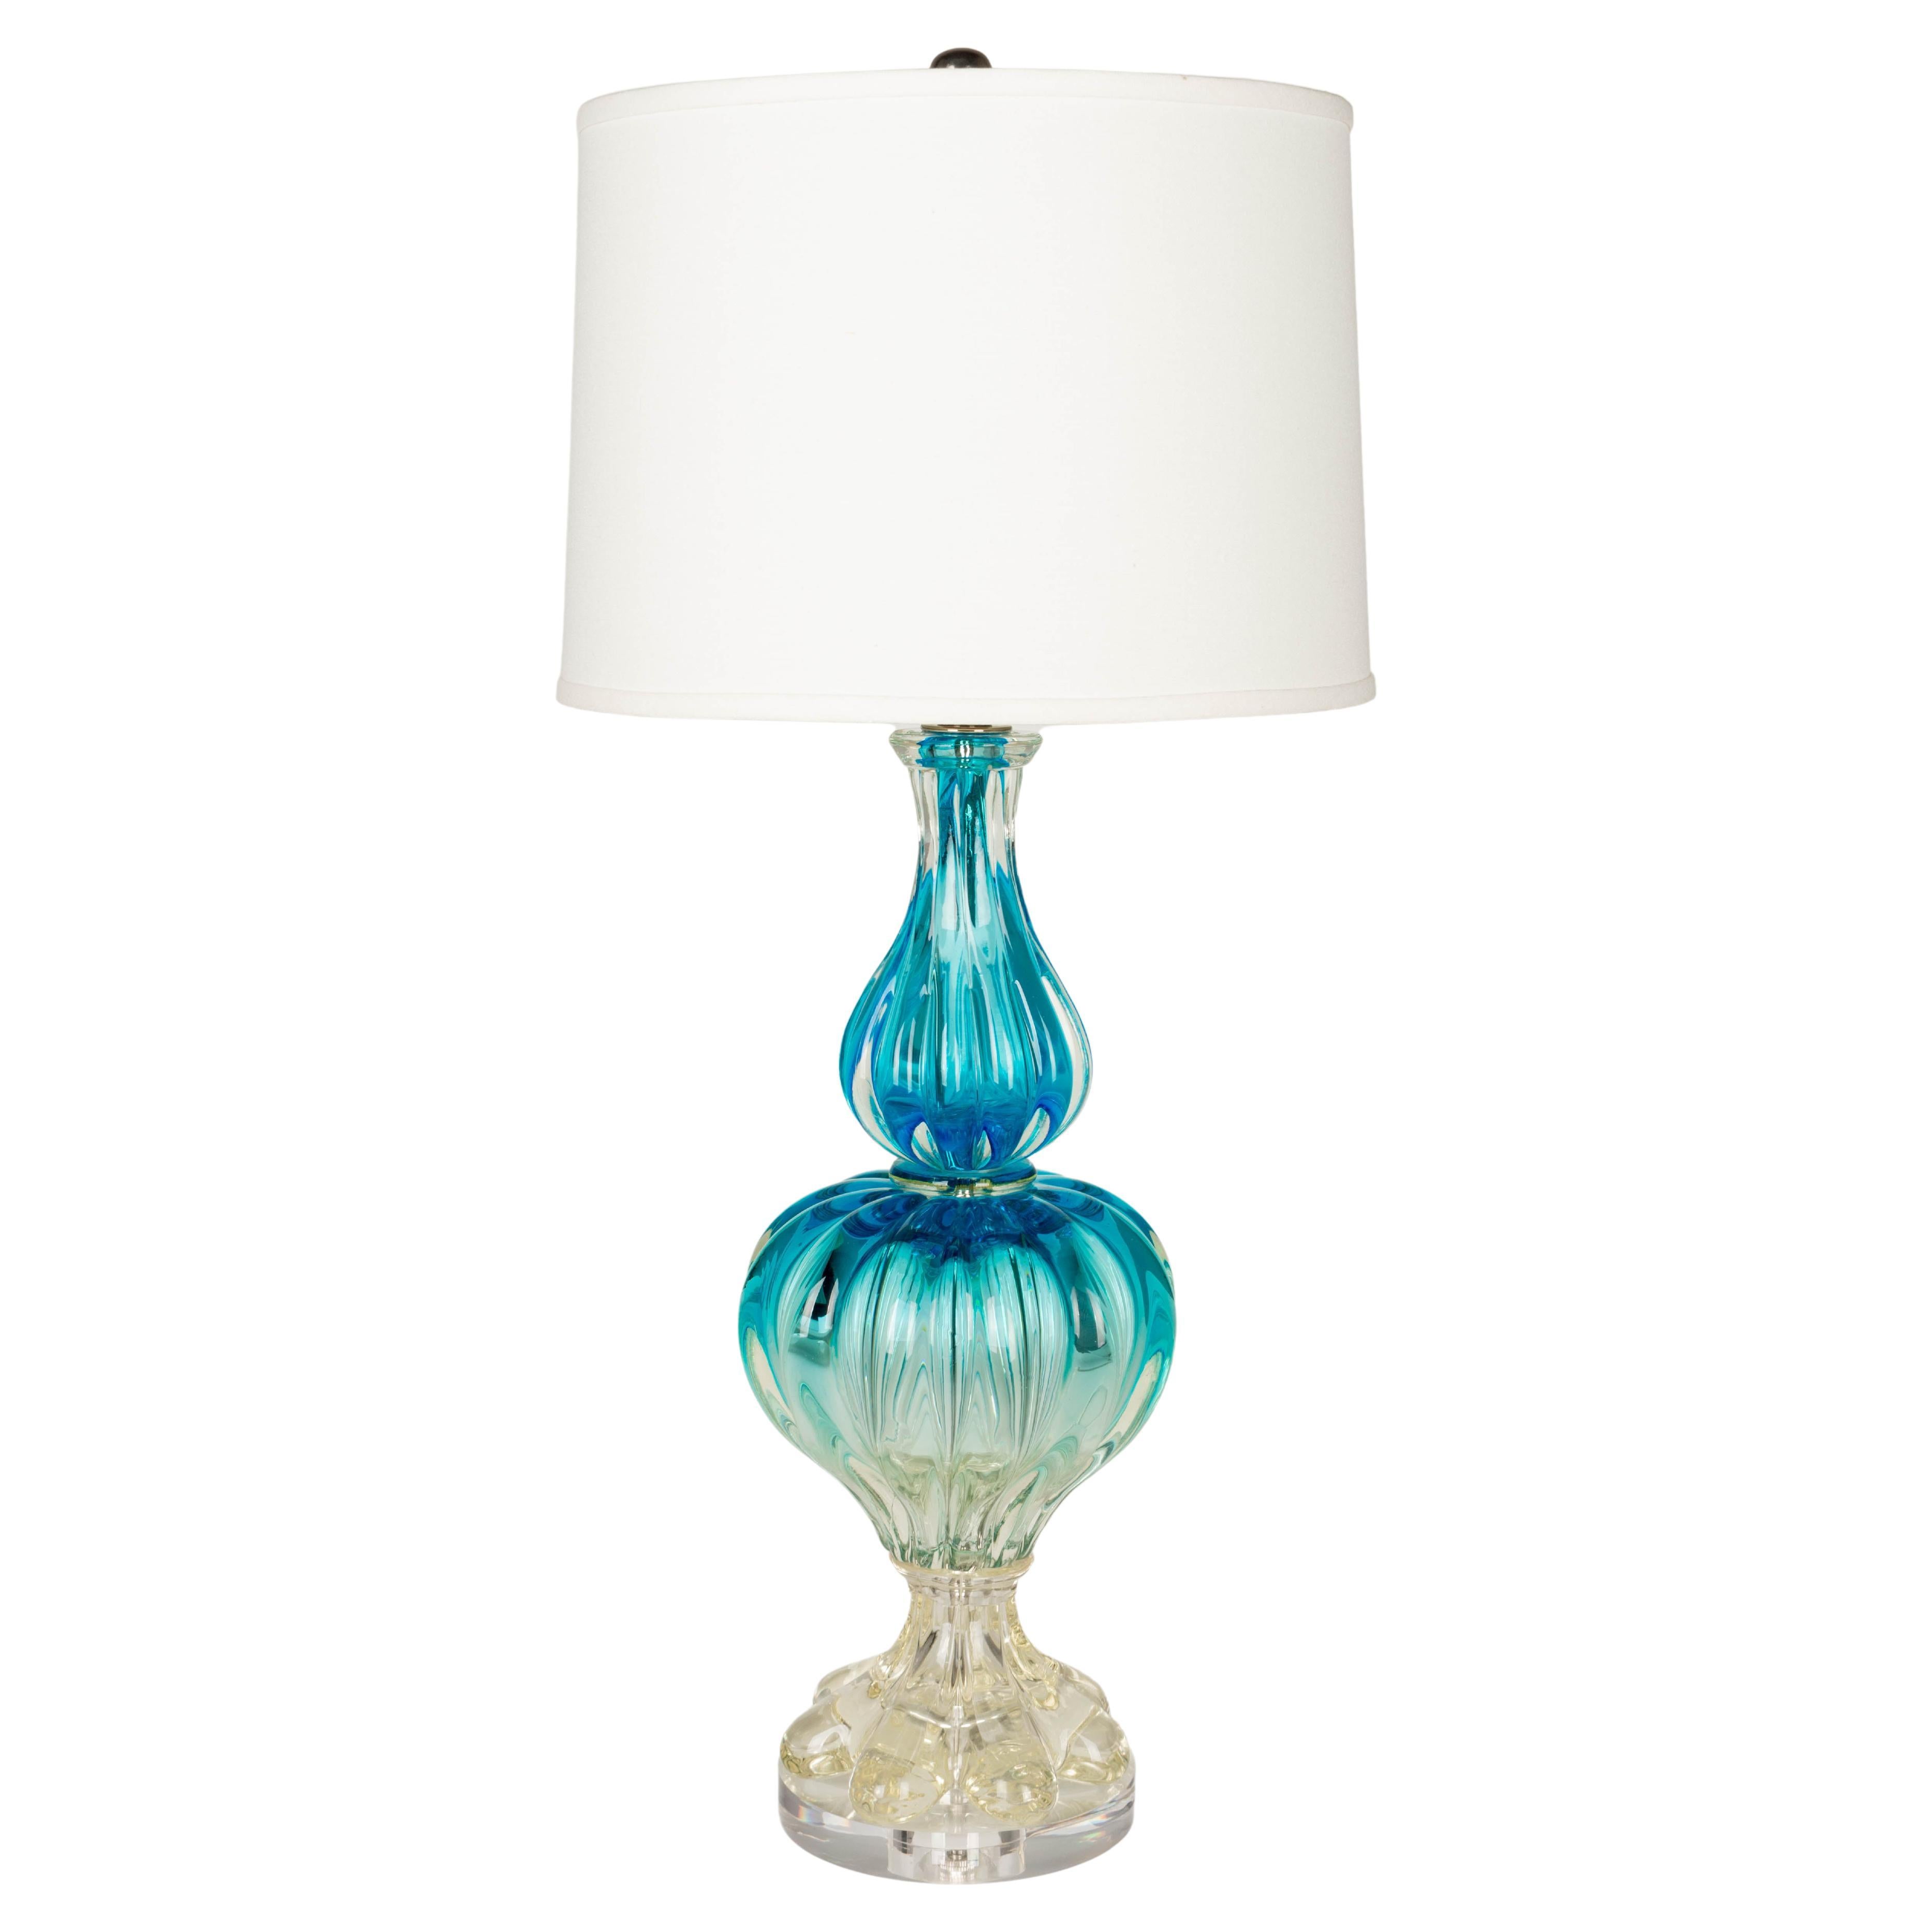 Midcentury Seguso Murano Glass Lamp For Sale